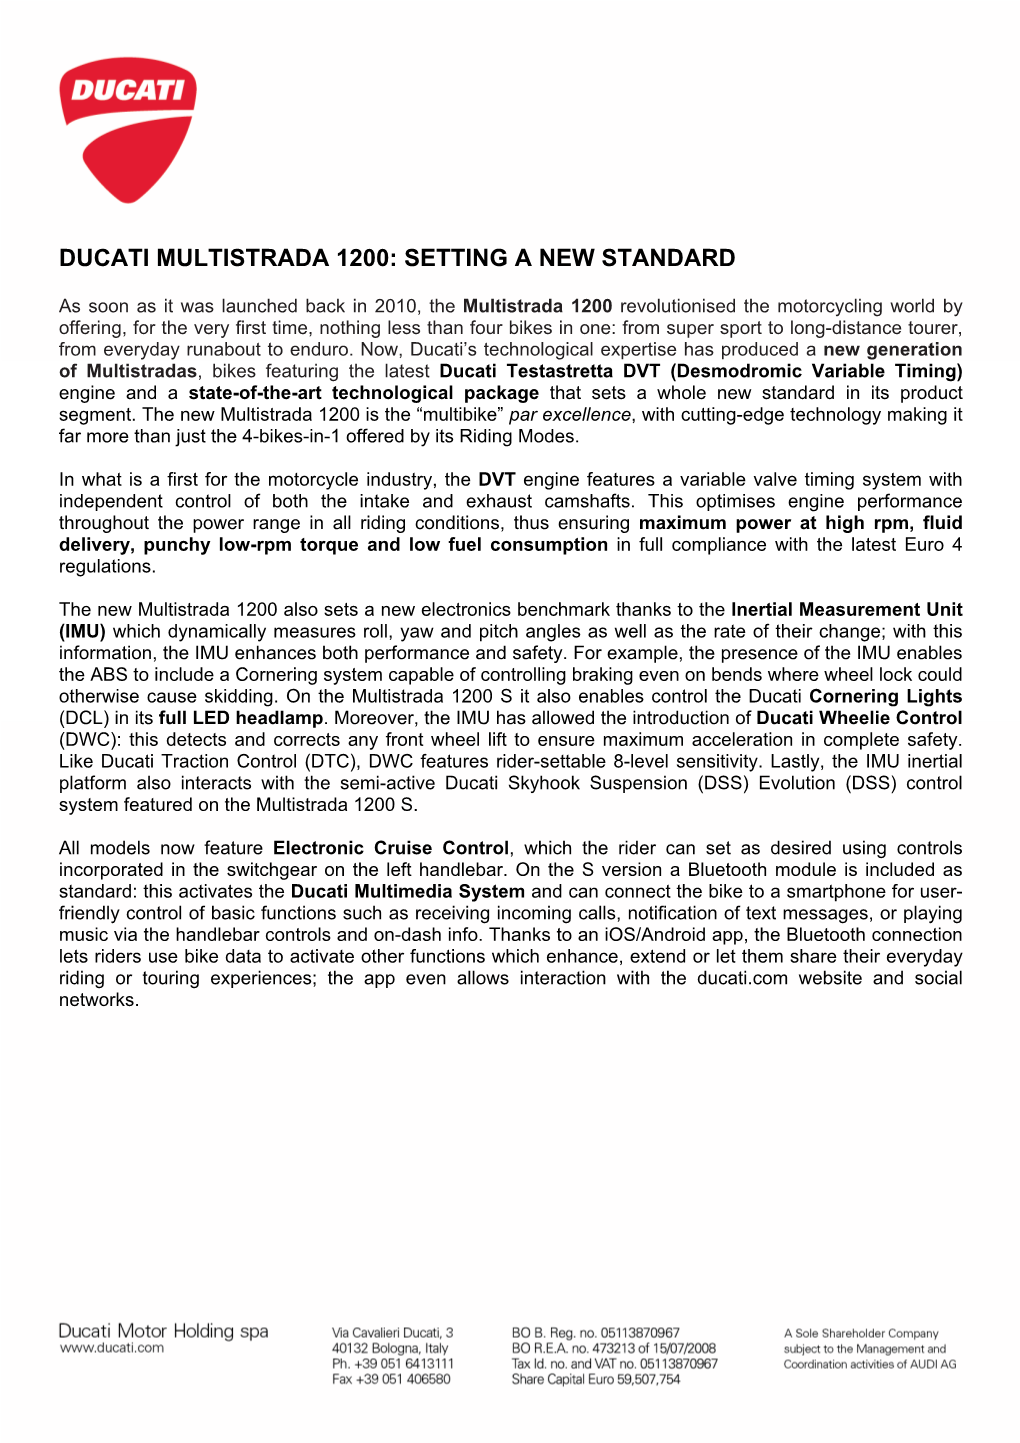 Ducati Multistrada 1200: Setting a New Standard